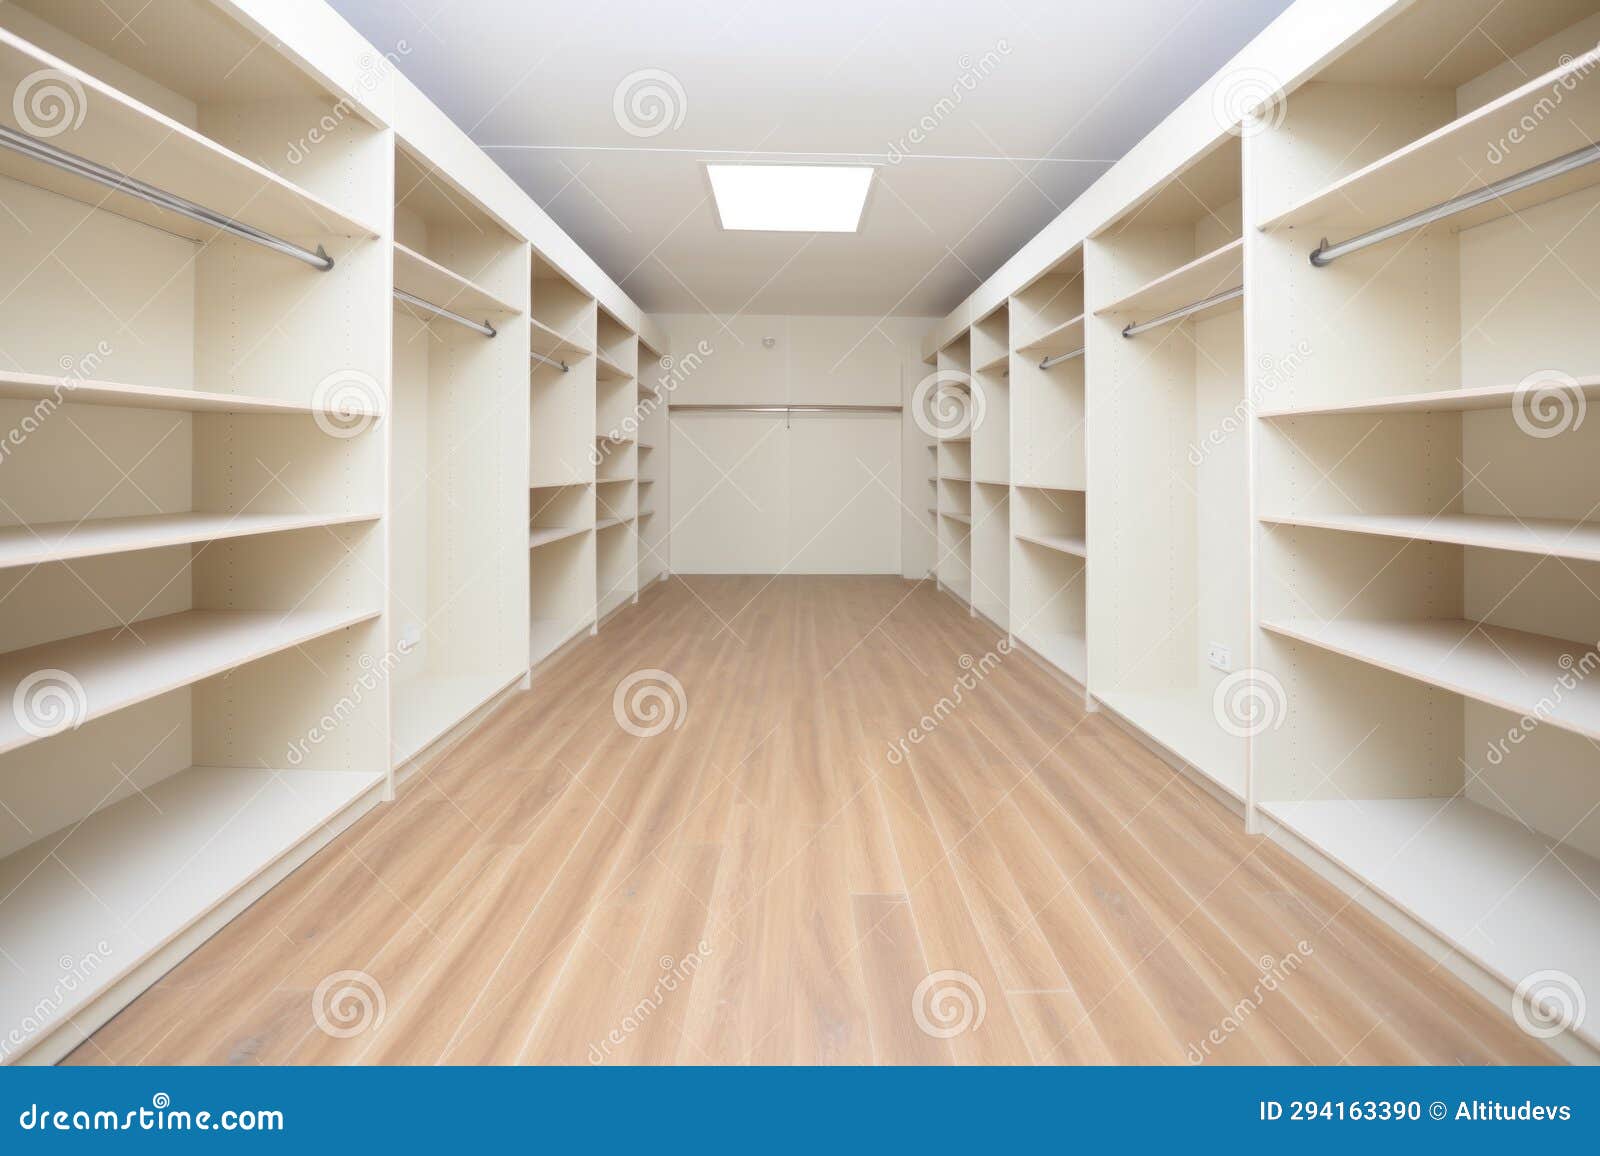 Big empty walk in closet